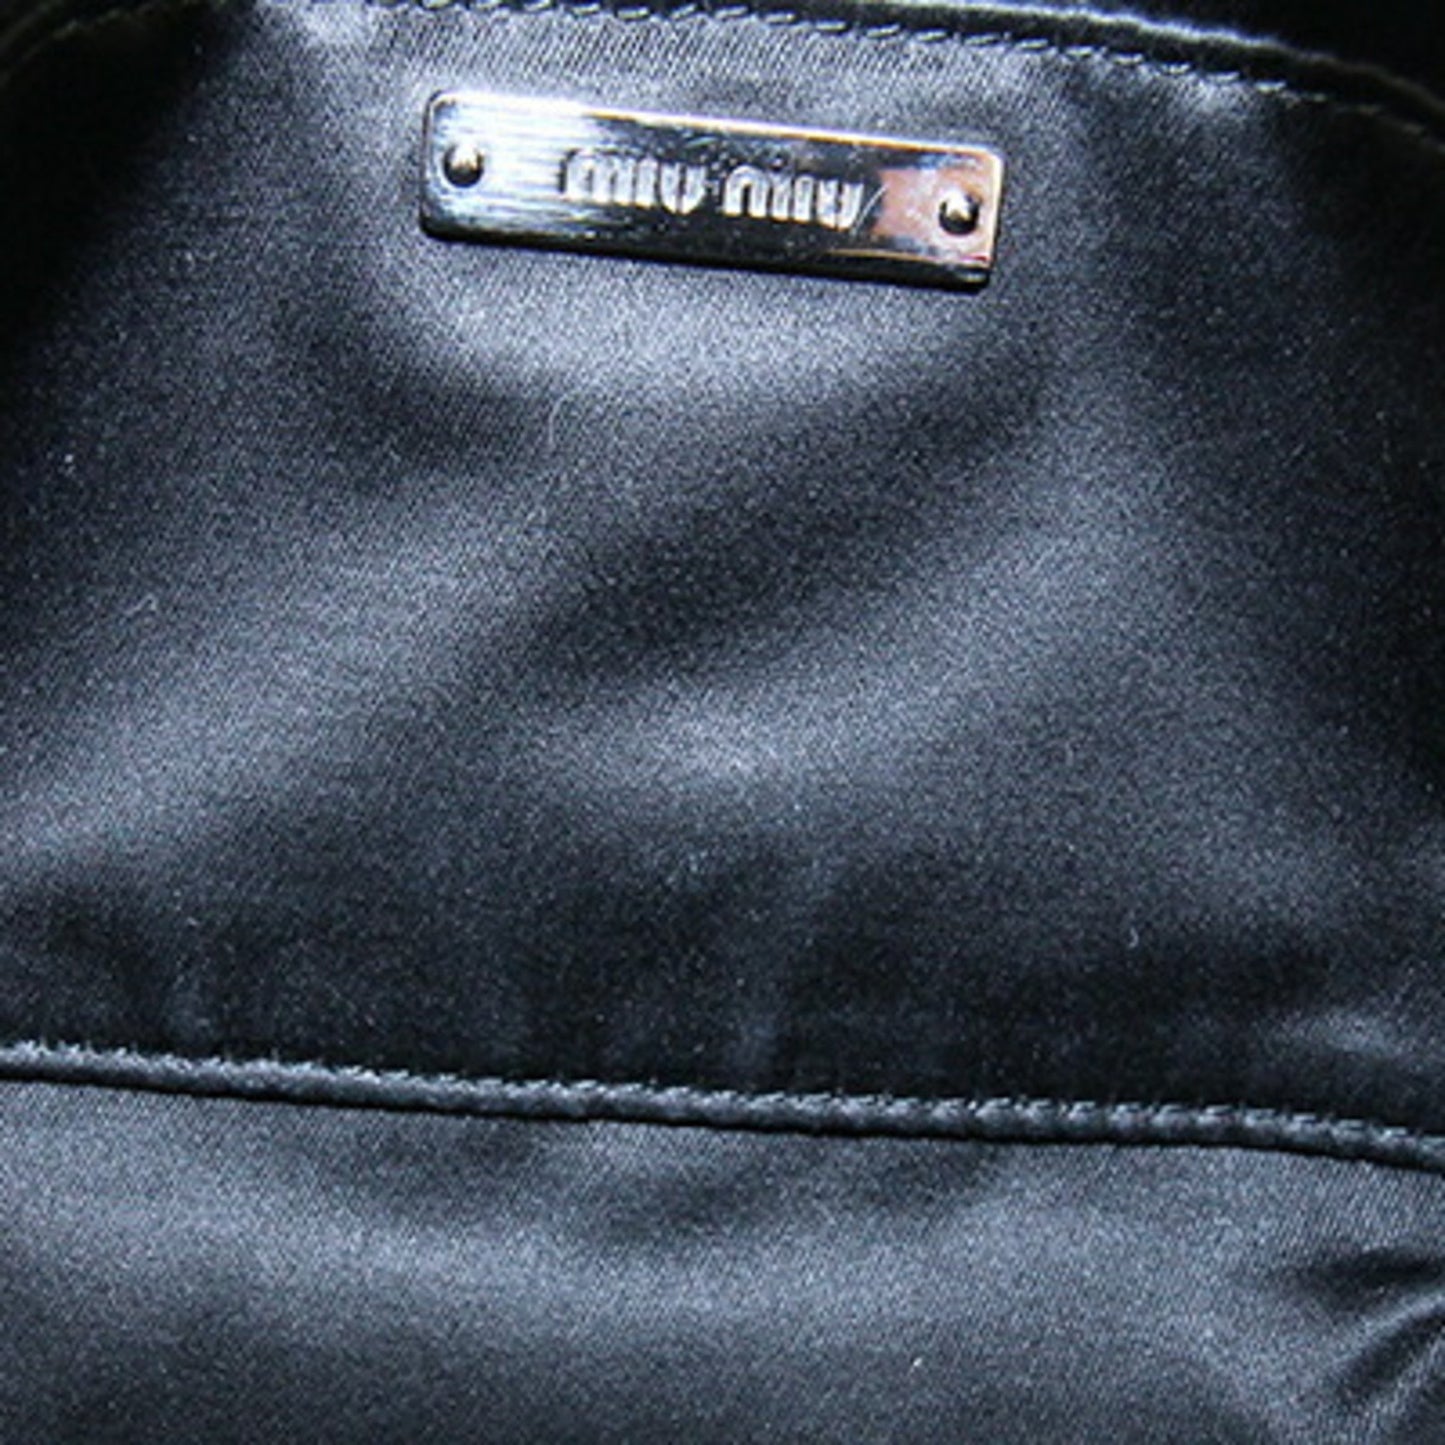 Miu Miu Women's Leather Pink Handbag with Shoulder Strap - Excellent Condition in Pink